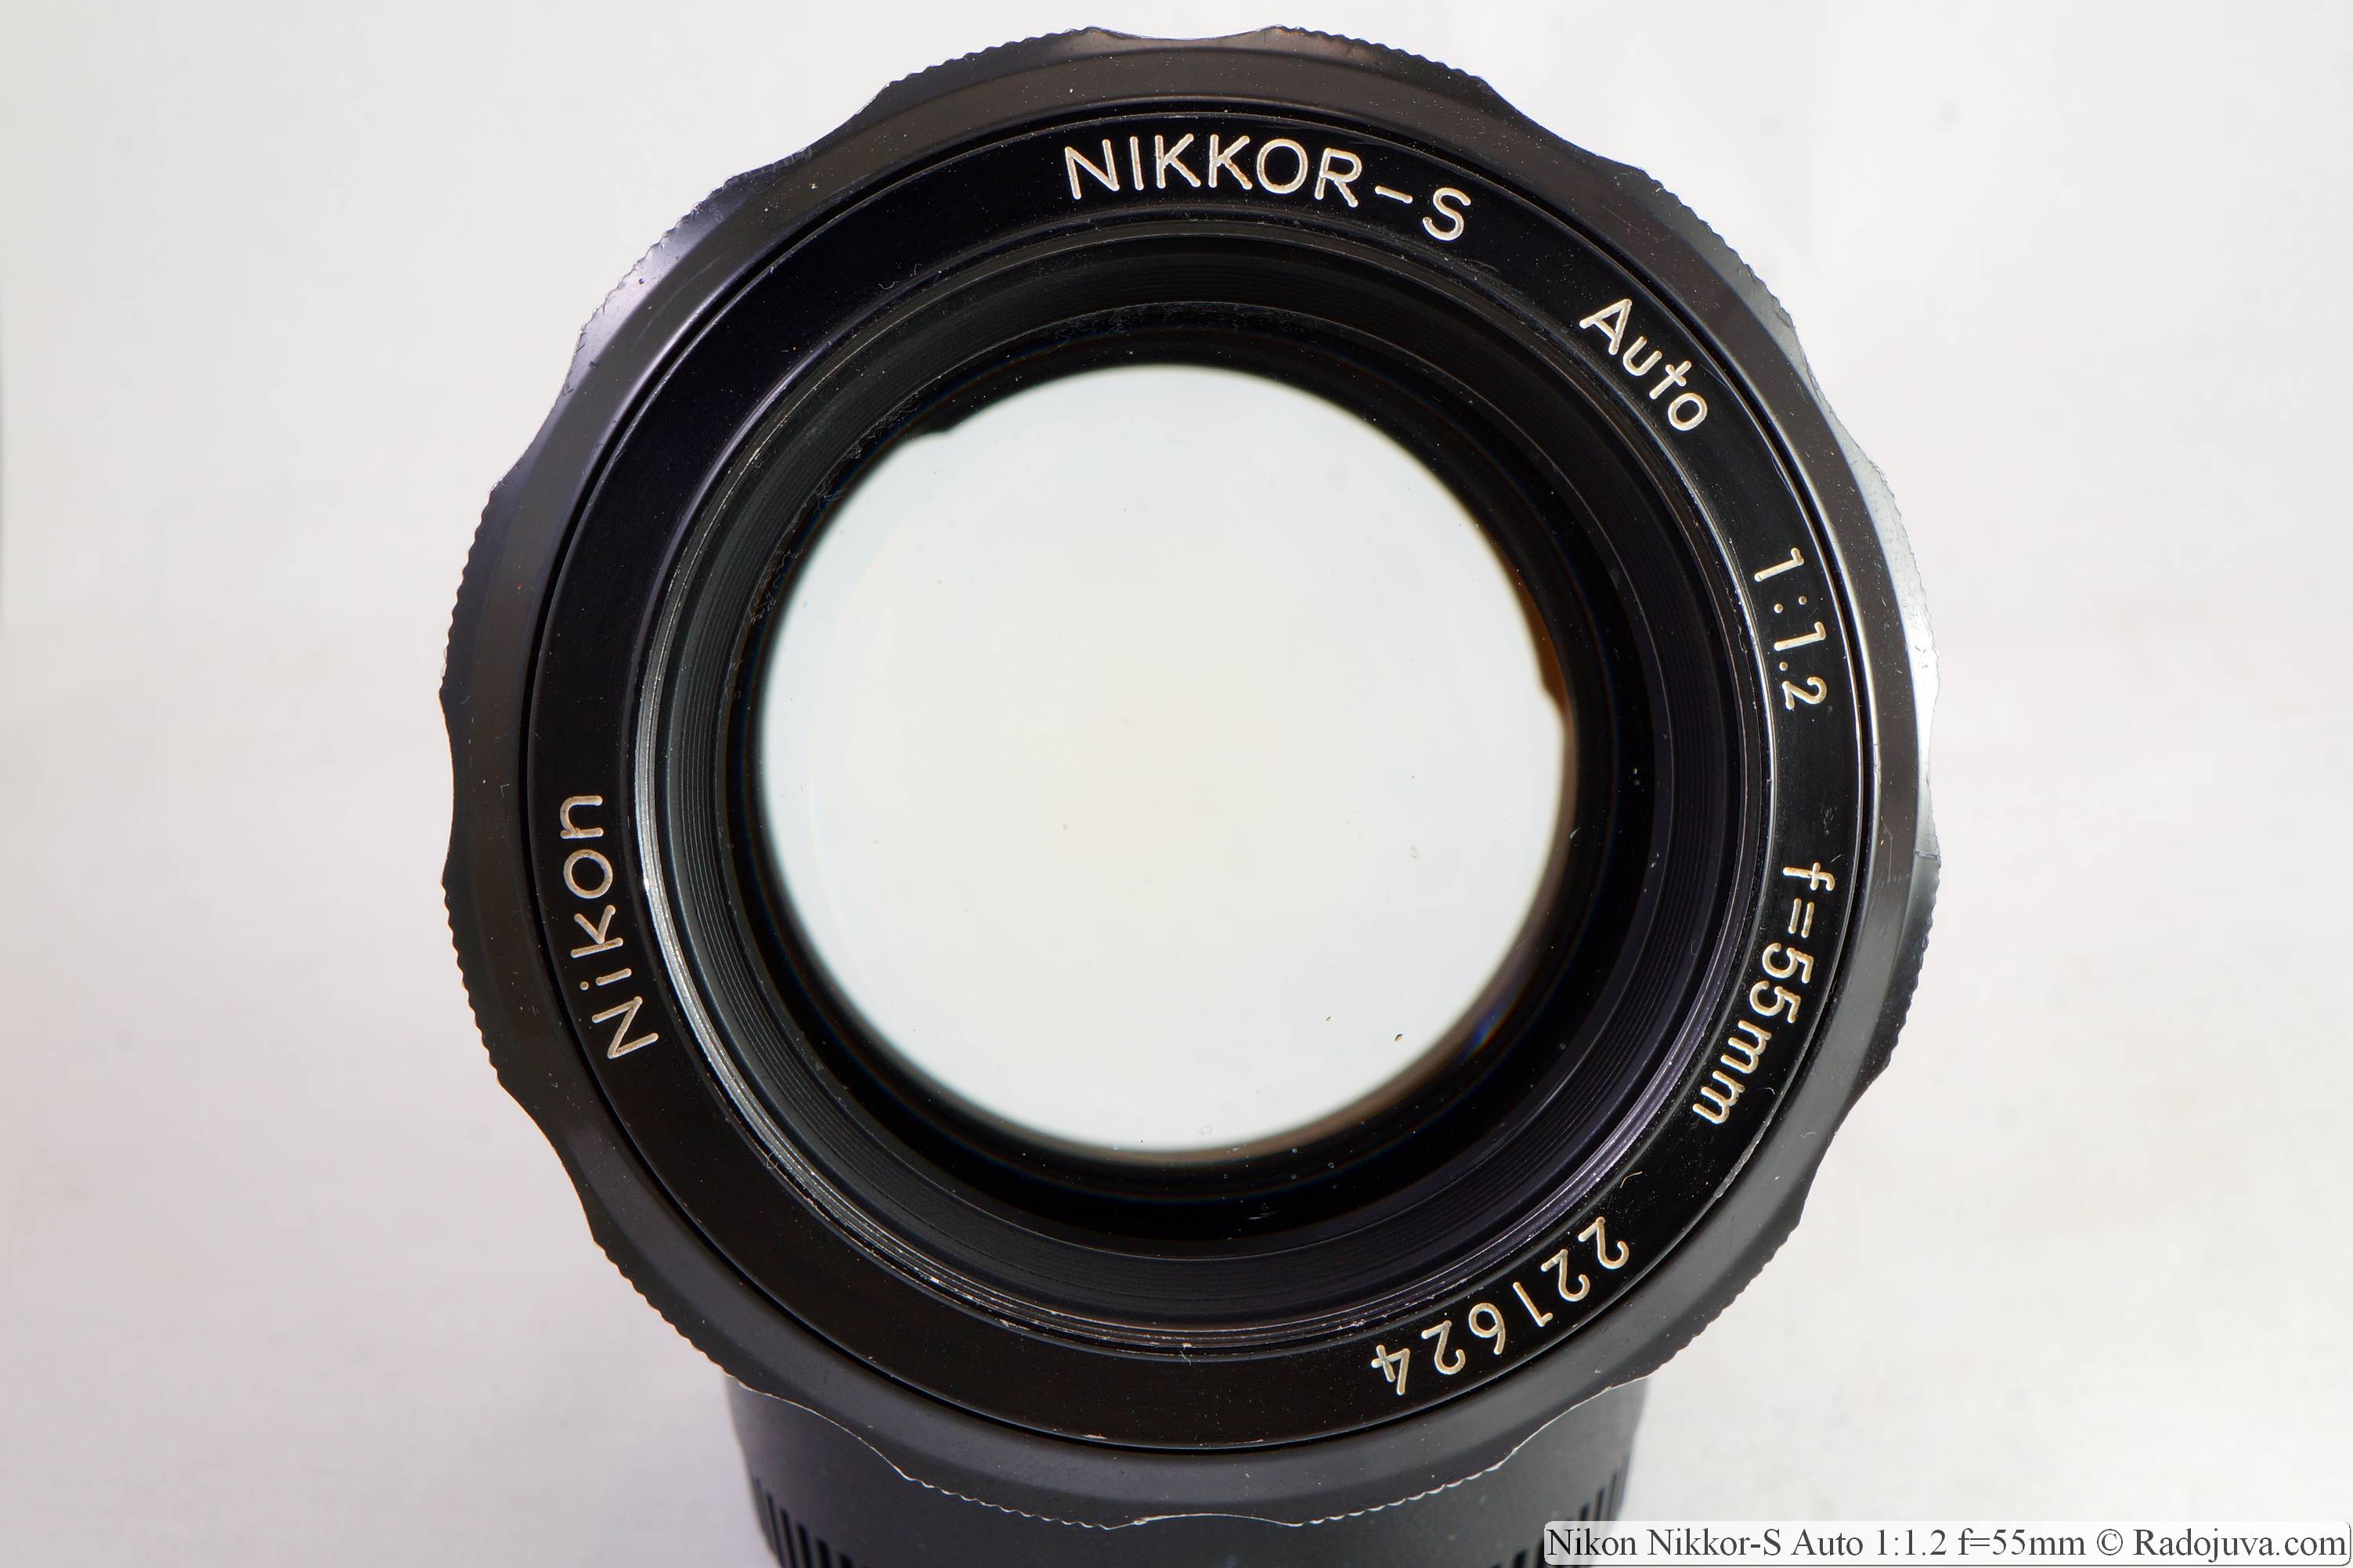 Nikon Nikkor-S Auto 1: 1.2 f = 55mm